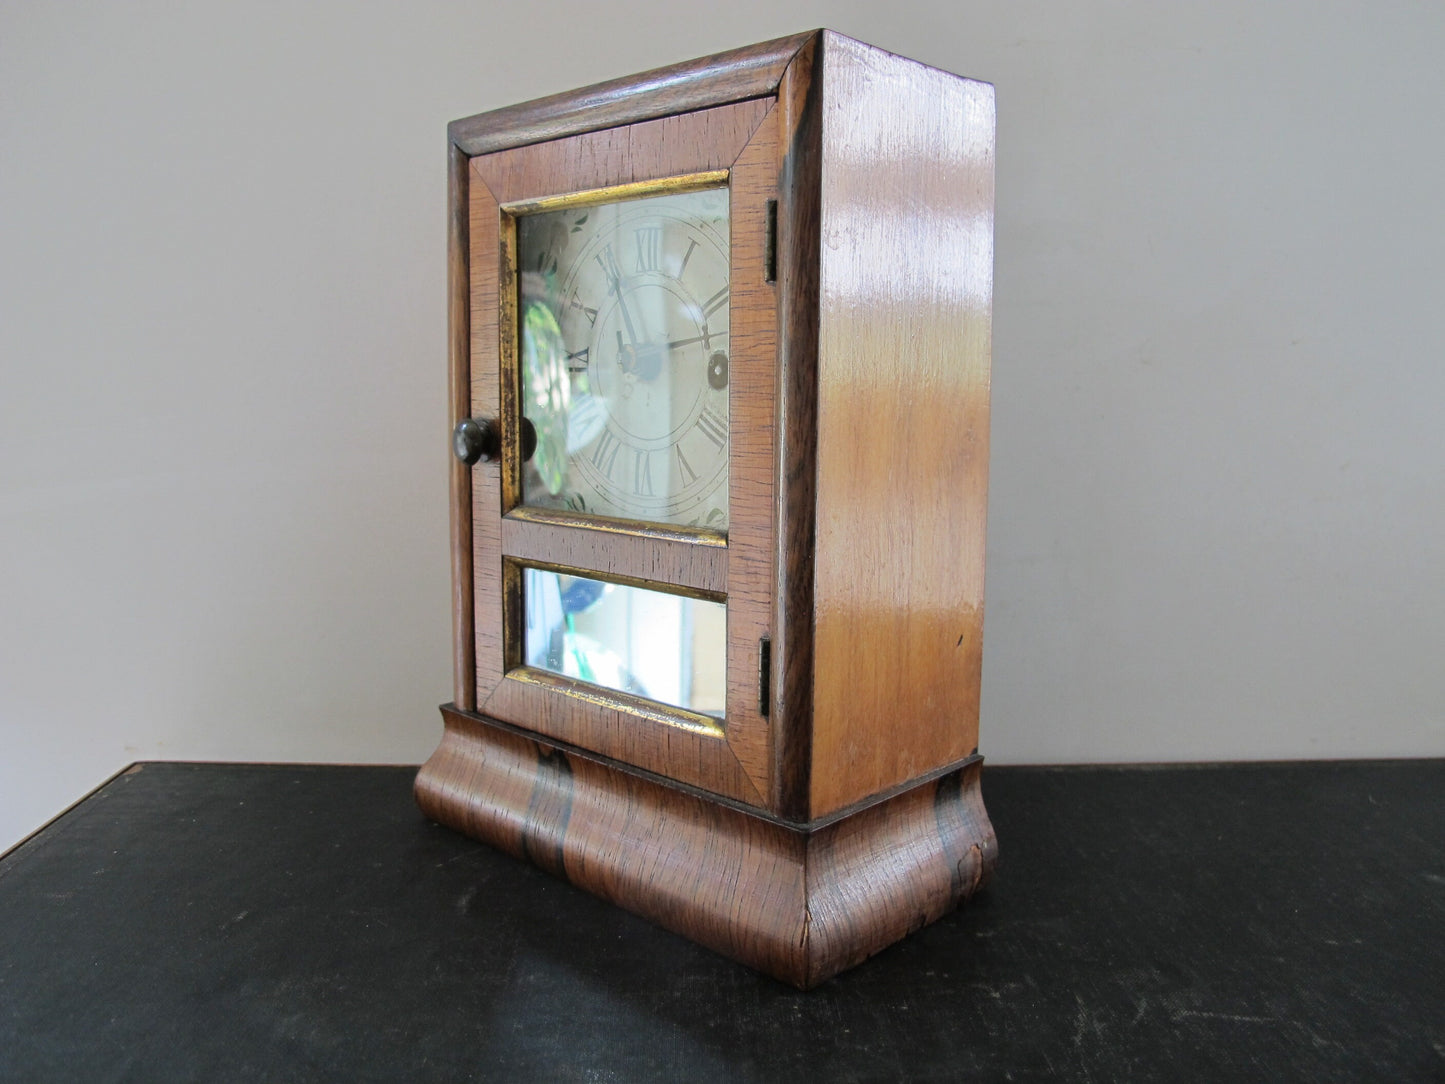 Clock Seth Thomas Miniature Mantle Clock Diminutive 1830s 1840s Rosewood Veneer Handpainted Face Museum Deaccessioned